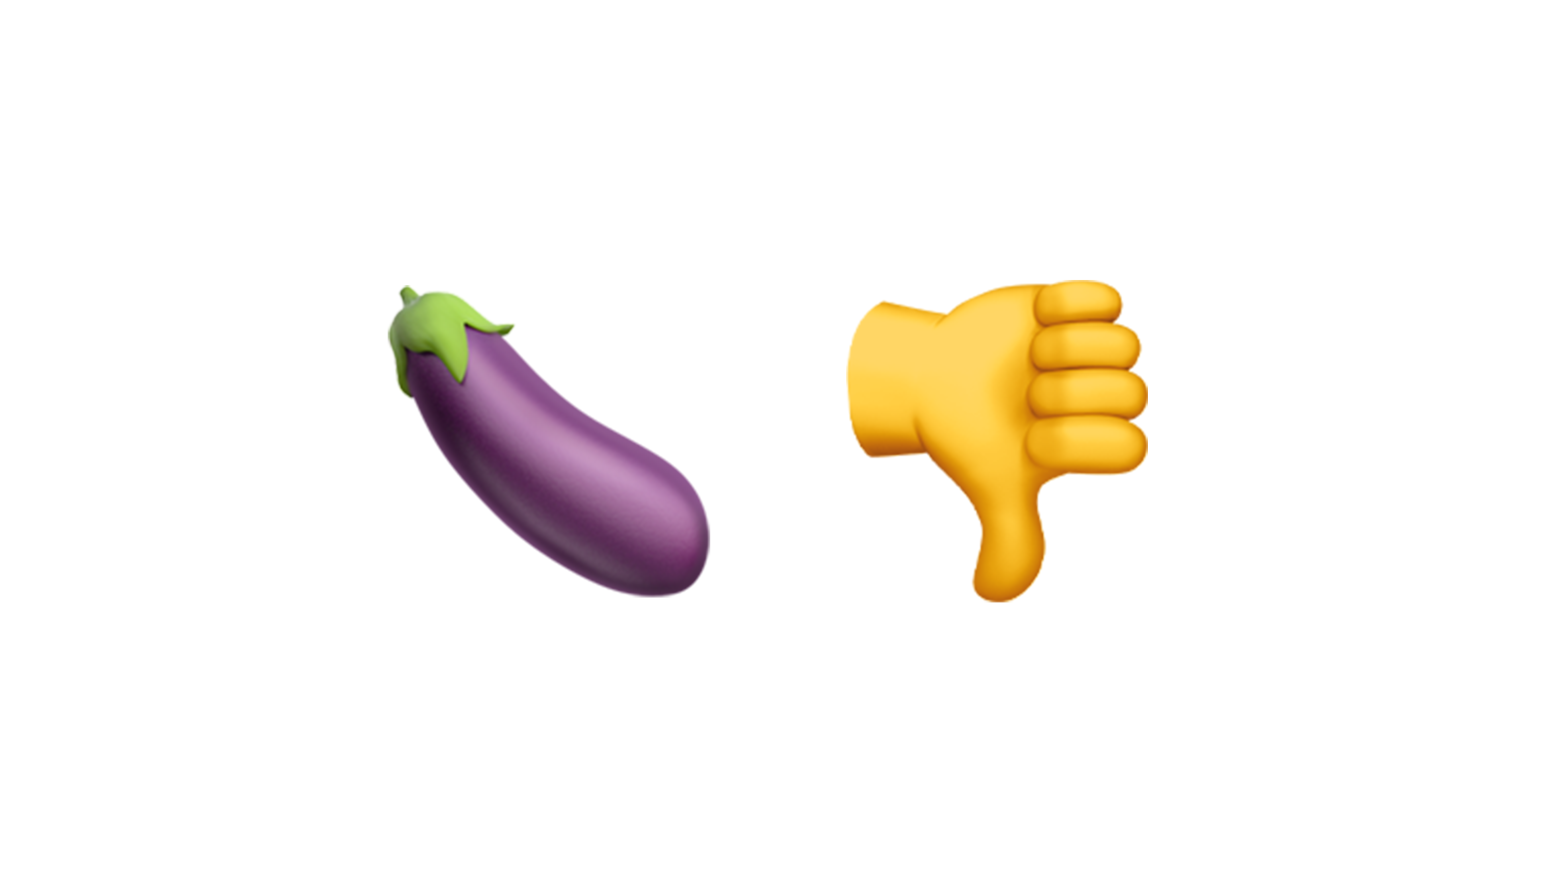 The eggplant emoji was the least likable emoji amongst females, Gen Z, and Millenials (Graphic: Gizmodo)